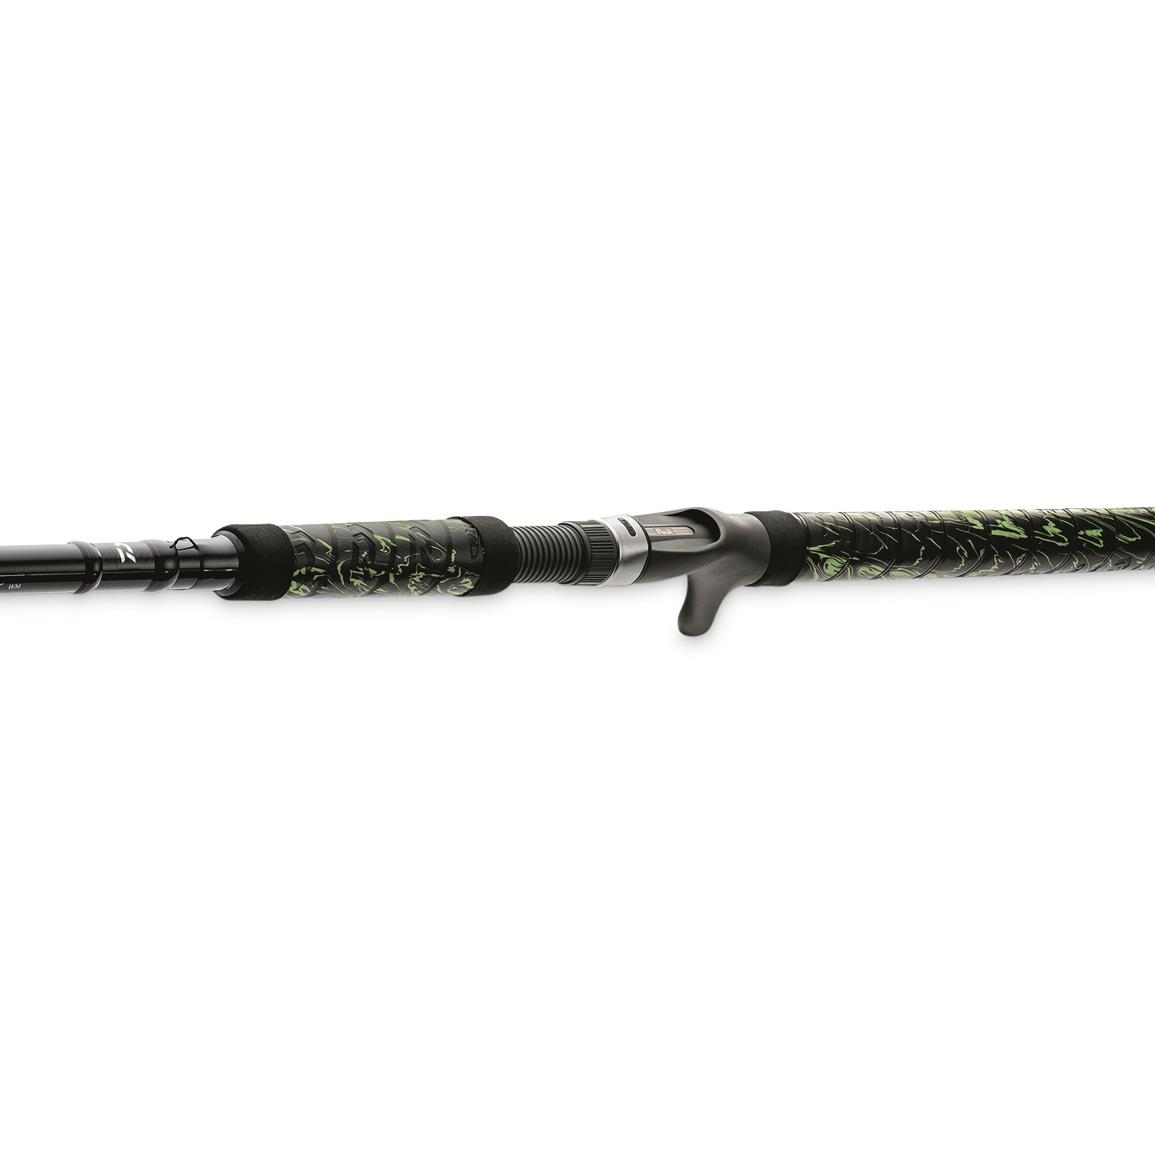 13 Fishing Meta Series Casting Rod, 7'6 Length, Medium Heavy